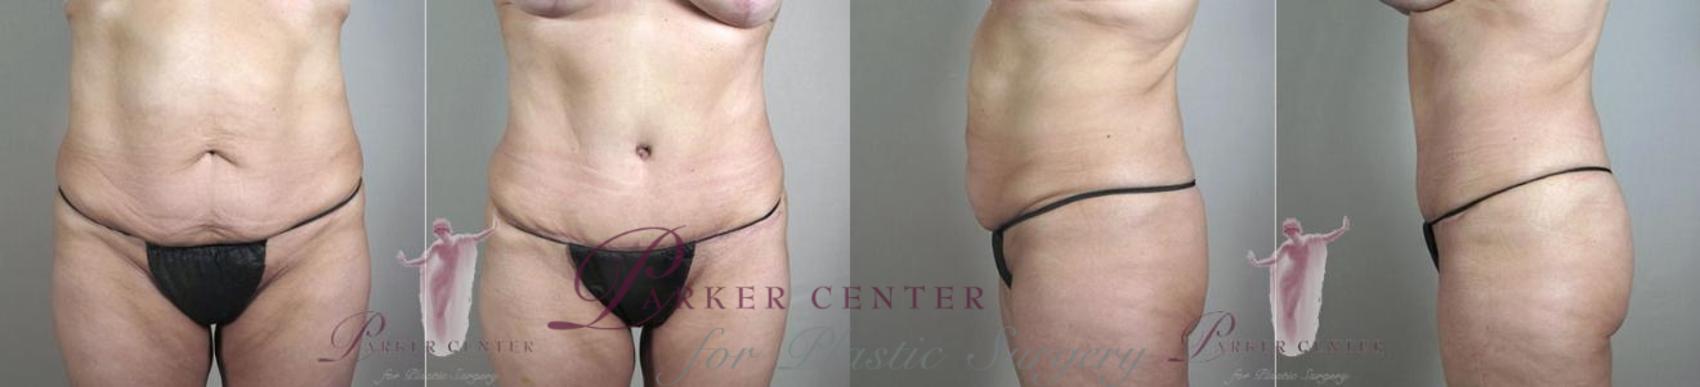 Body Lift Case 1148 Before & After Front | Paramus, NJ | Parker Center for Plastic Surgery